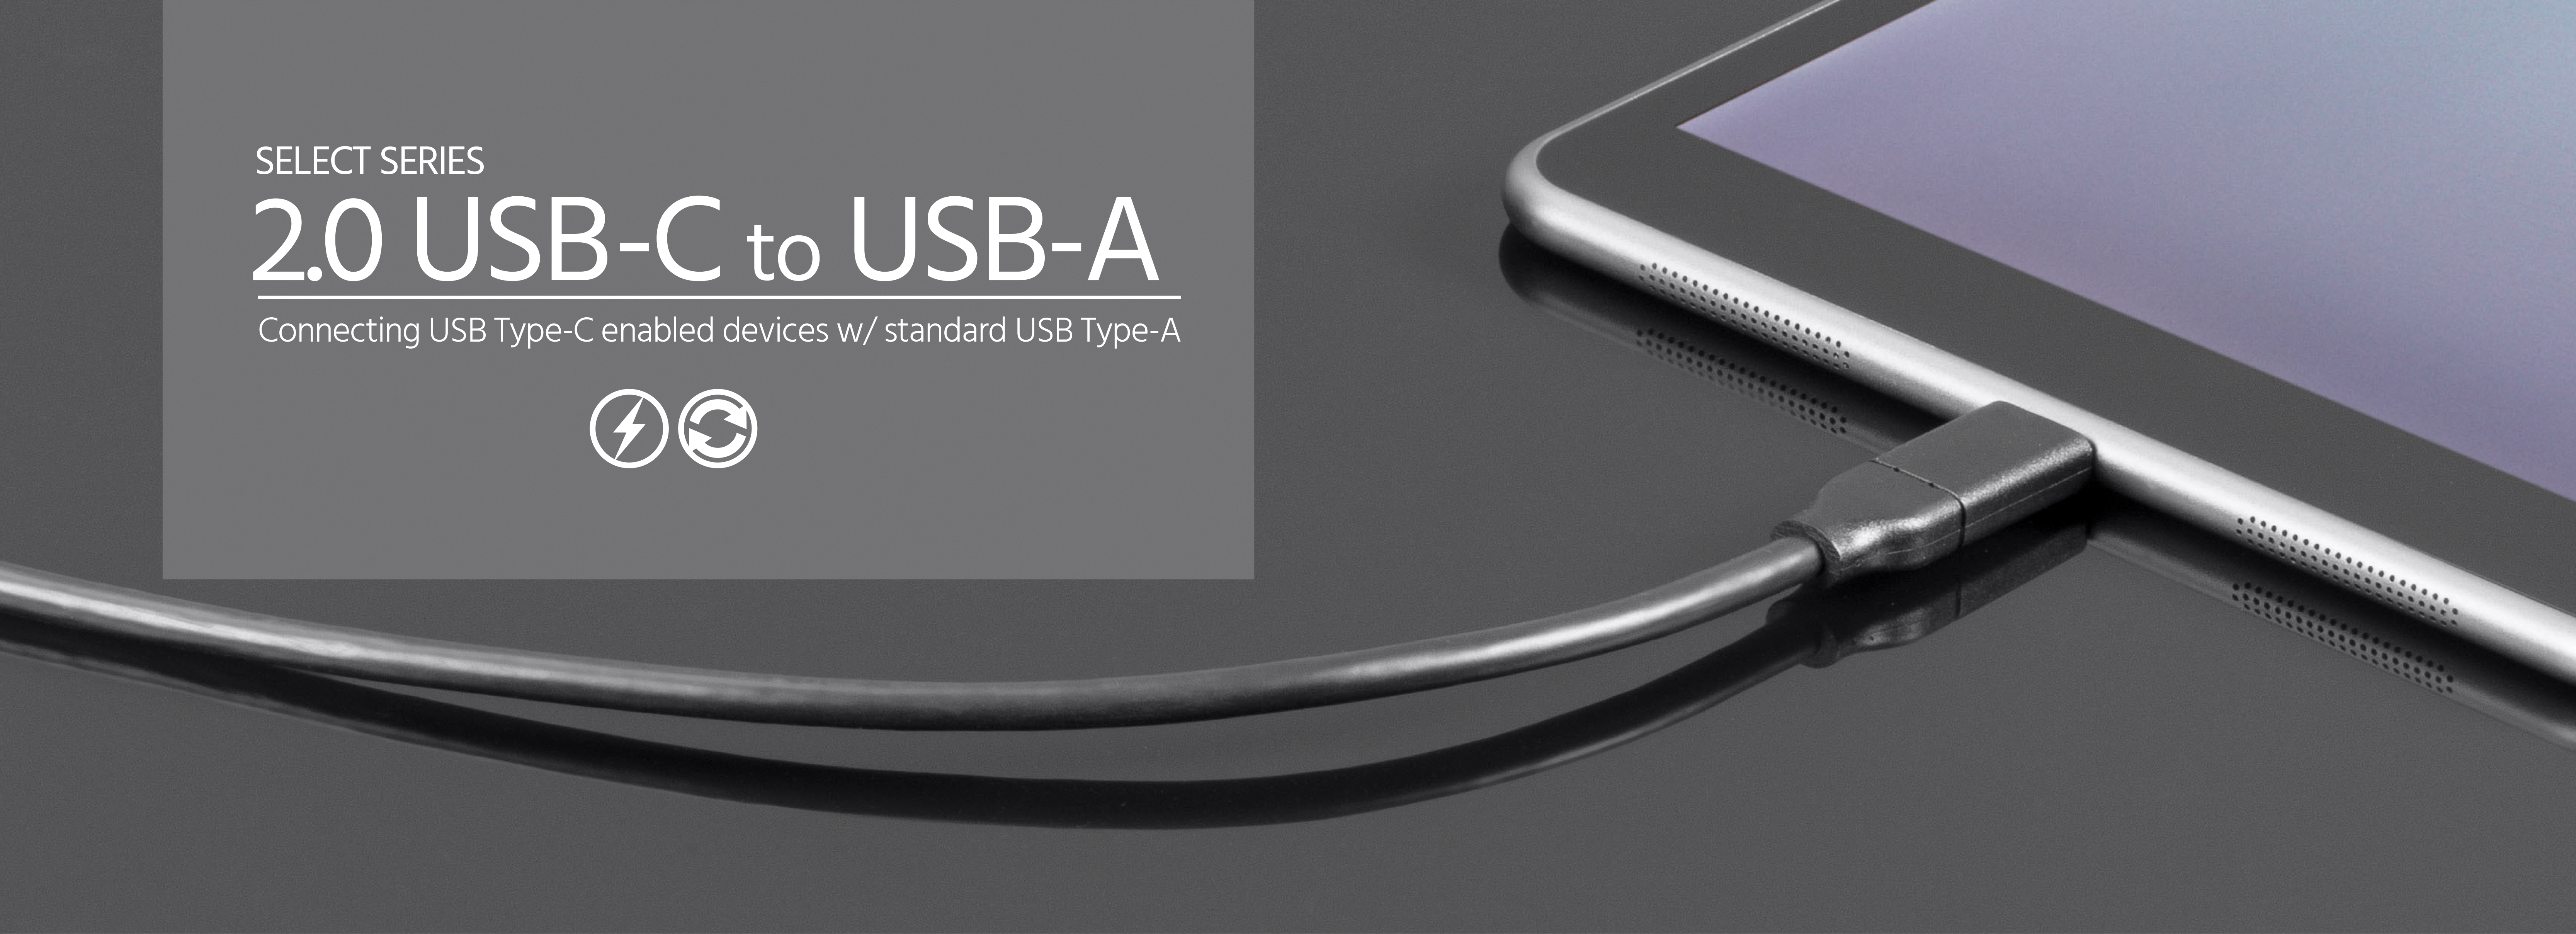 2.0 USB-C to USB-A